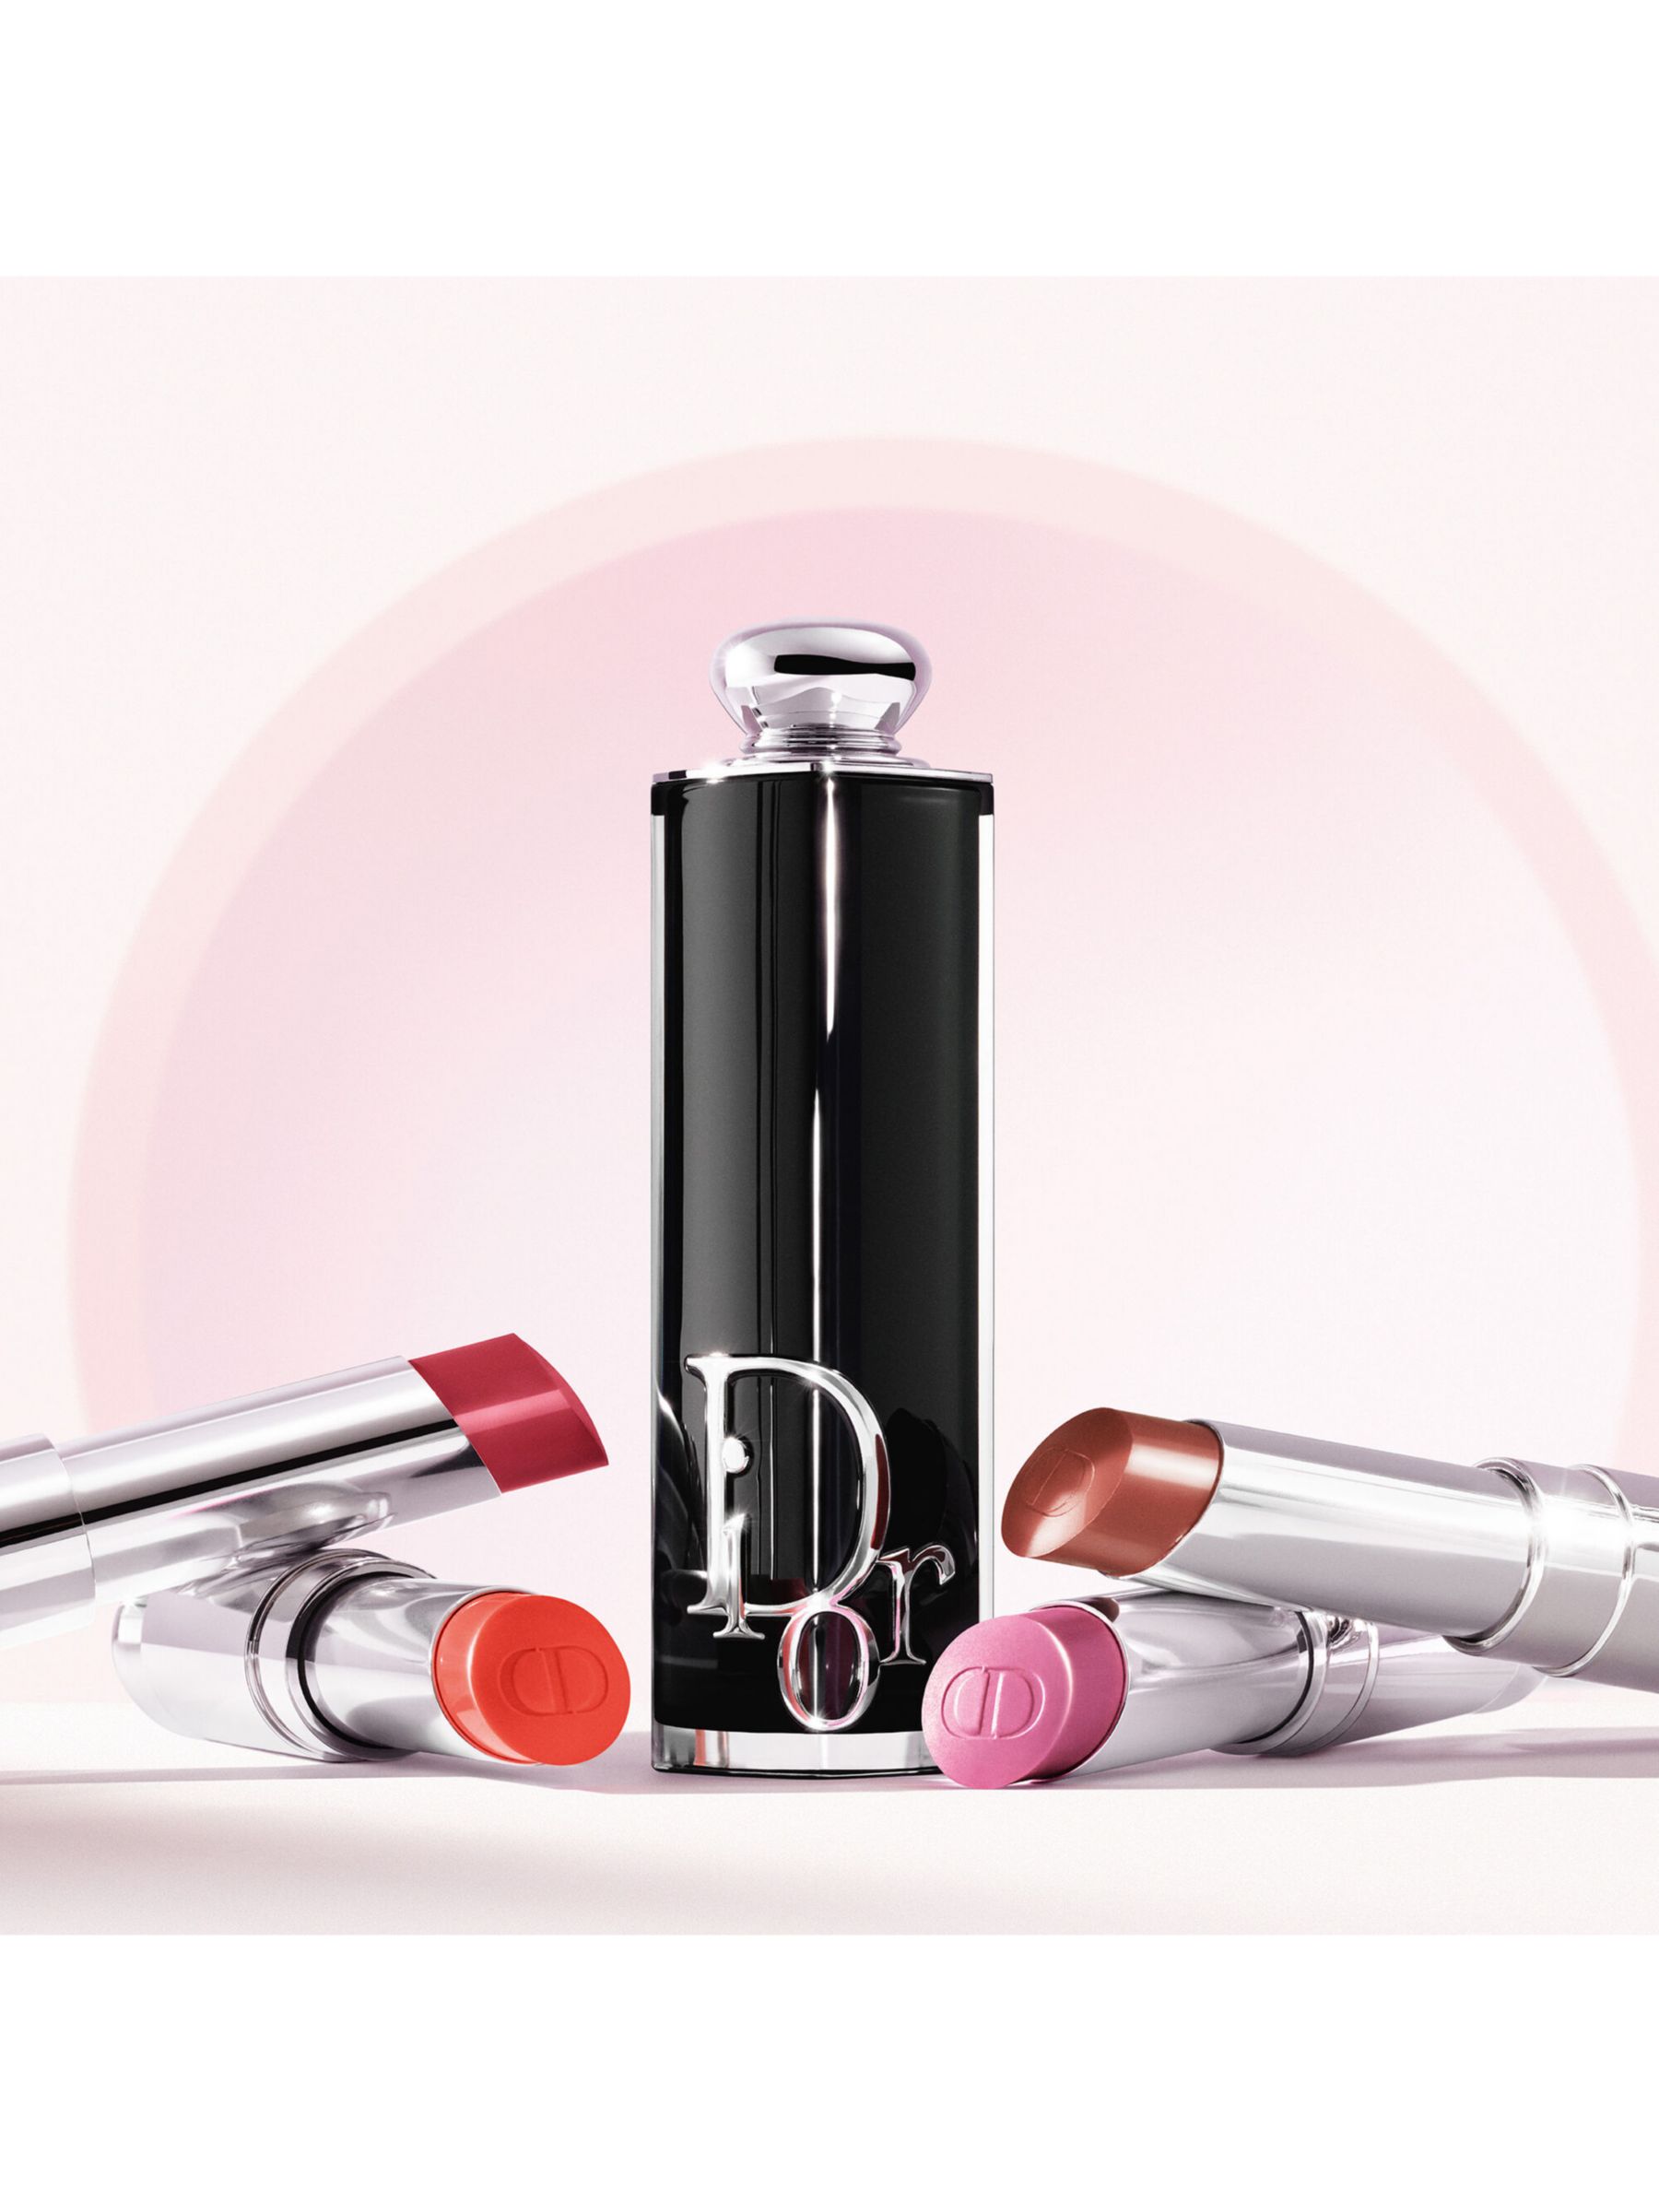 DIOR Addict Shine Lipstick Refill, 566 Peony Pink